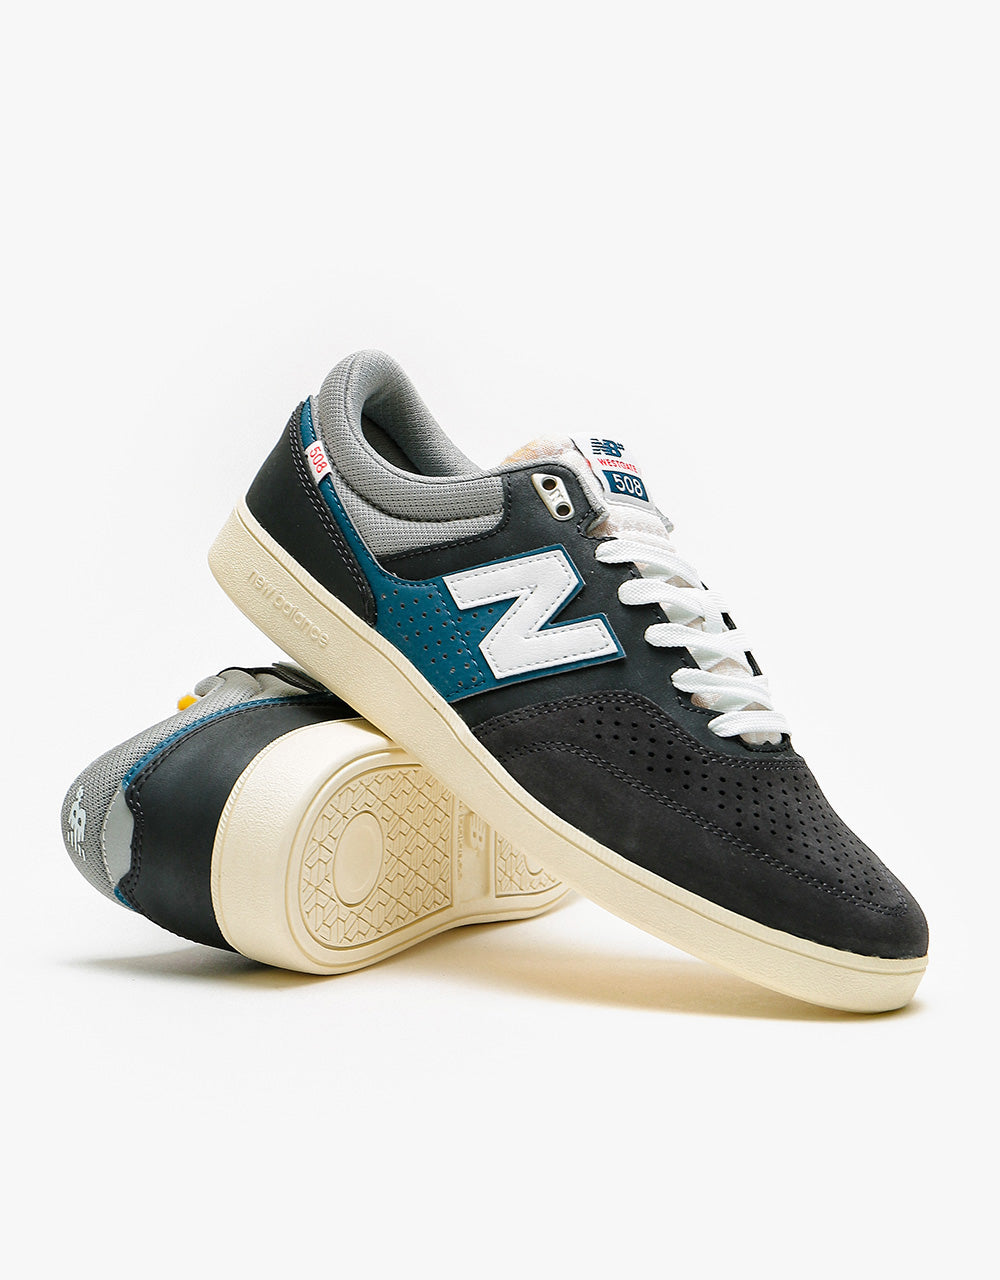 New Balance Numeric 508 Skate Shoes - Navy/White